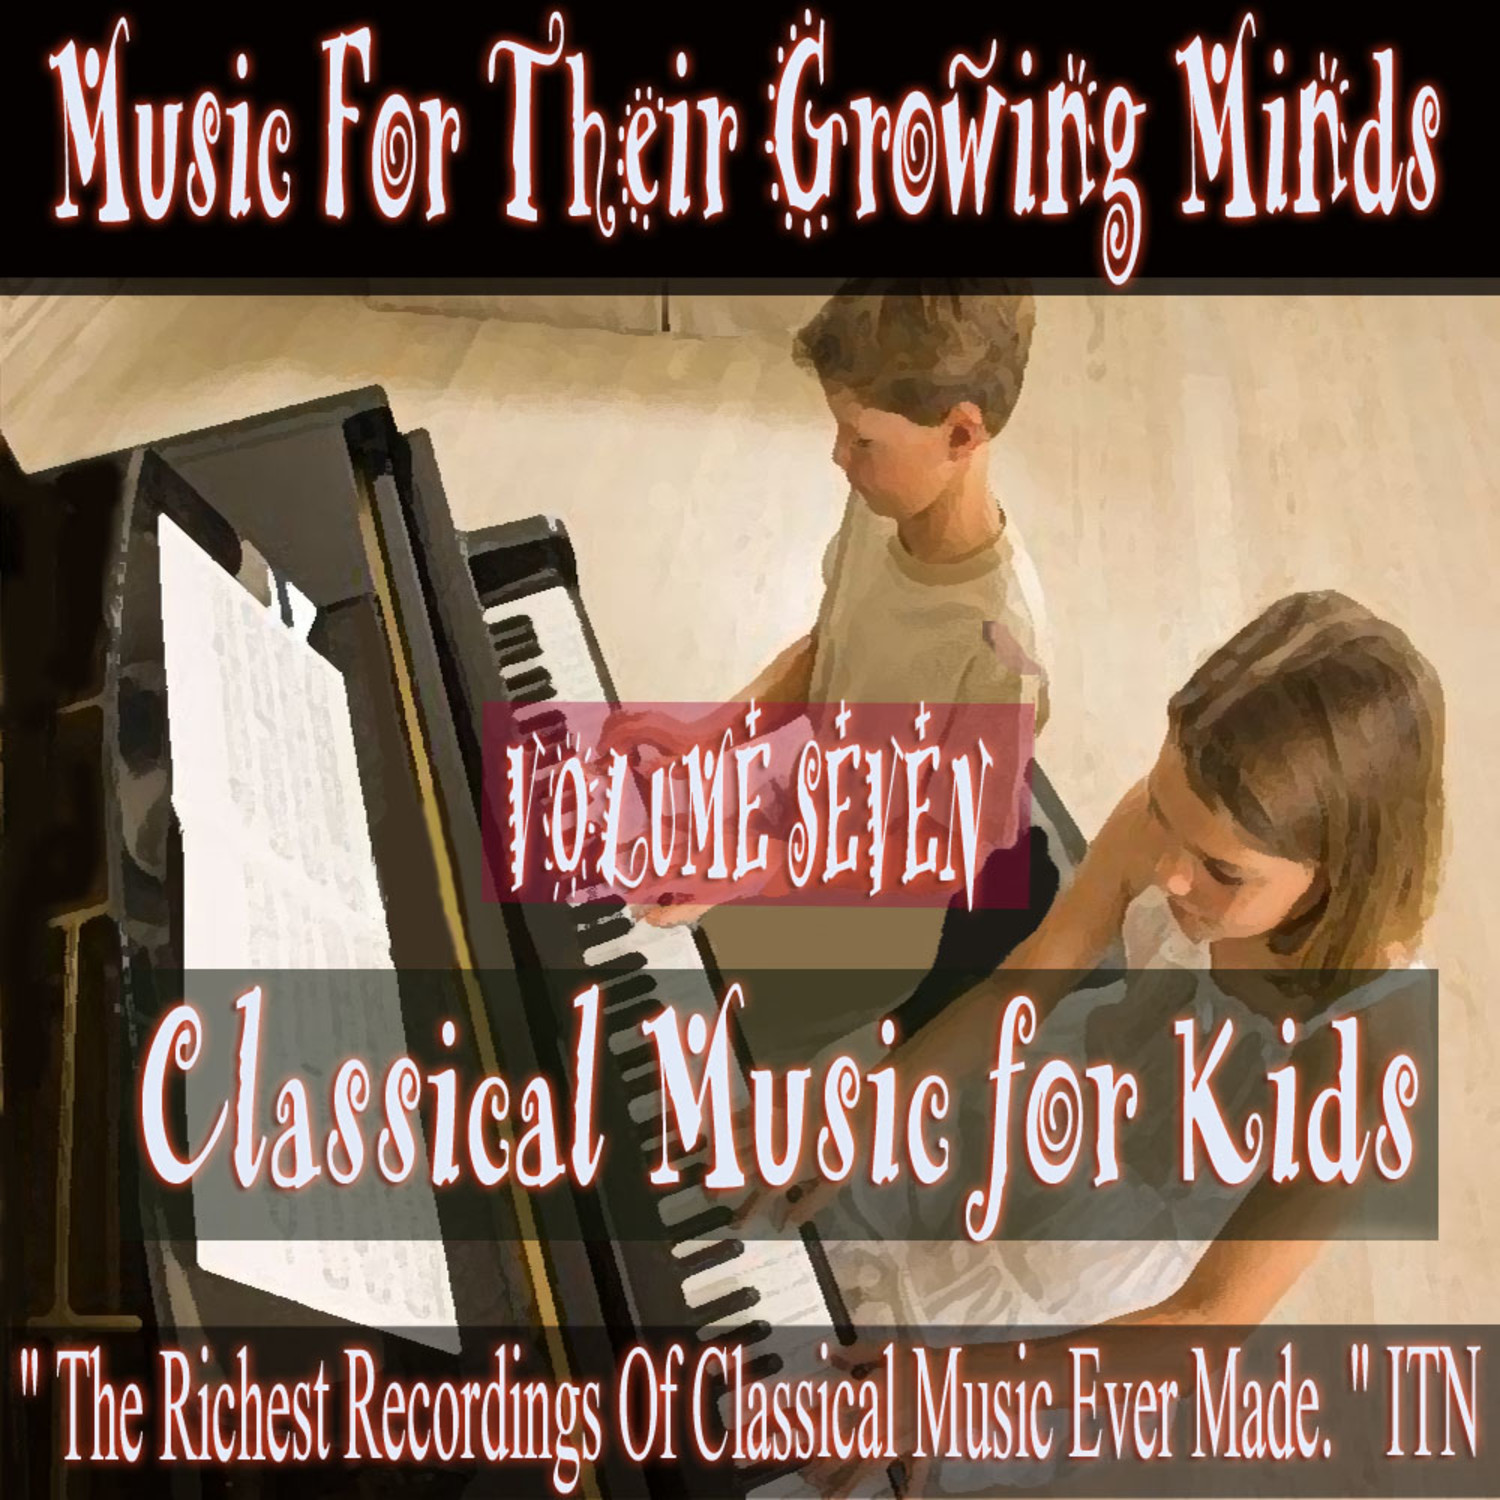 Classical Music for Kids Volume Seven